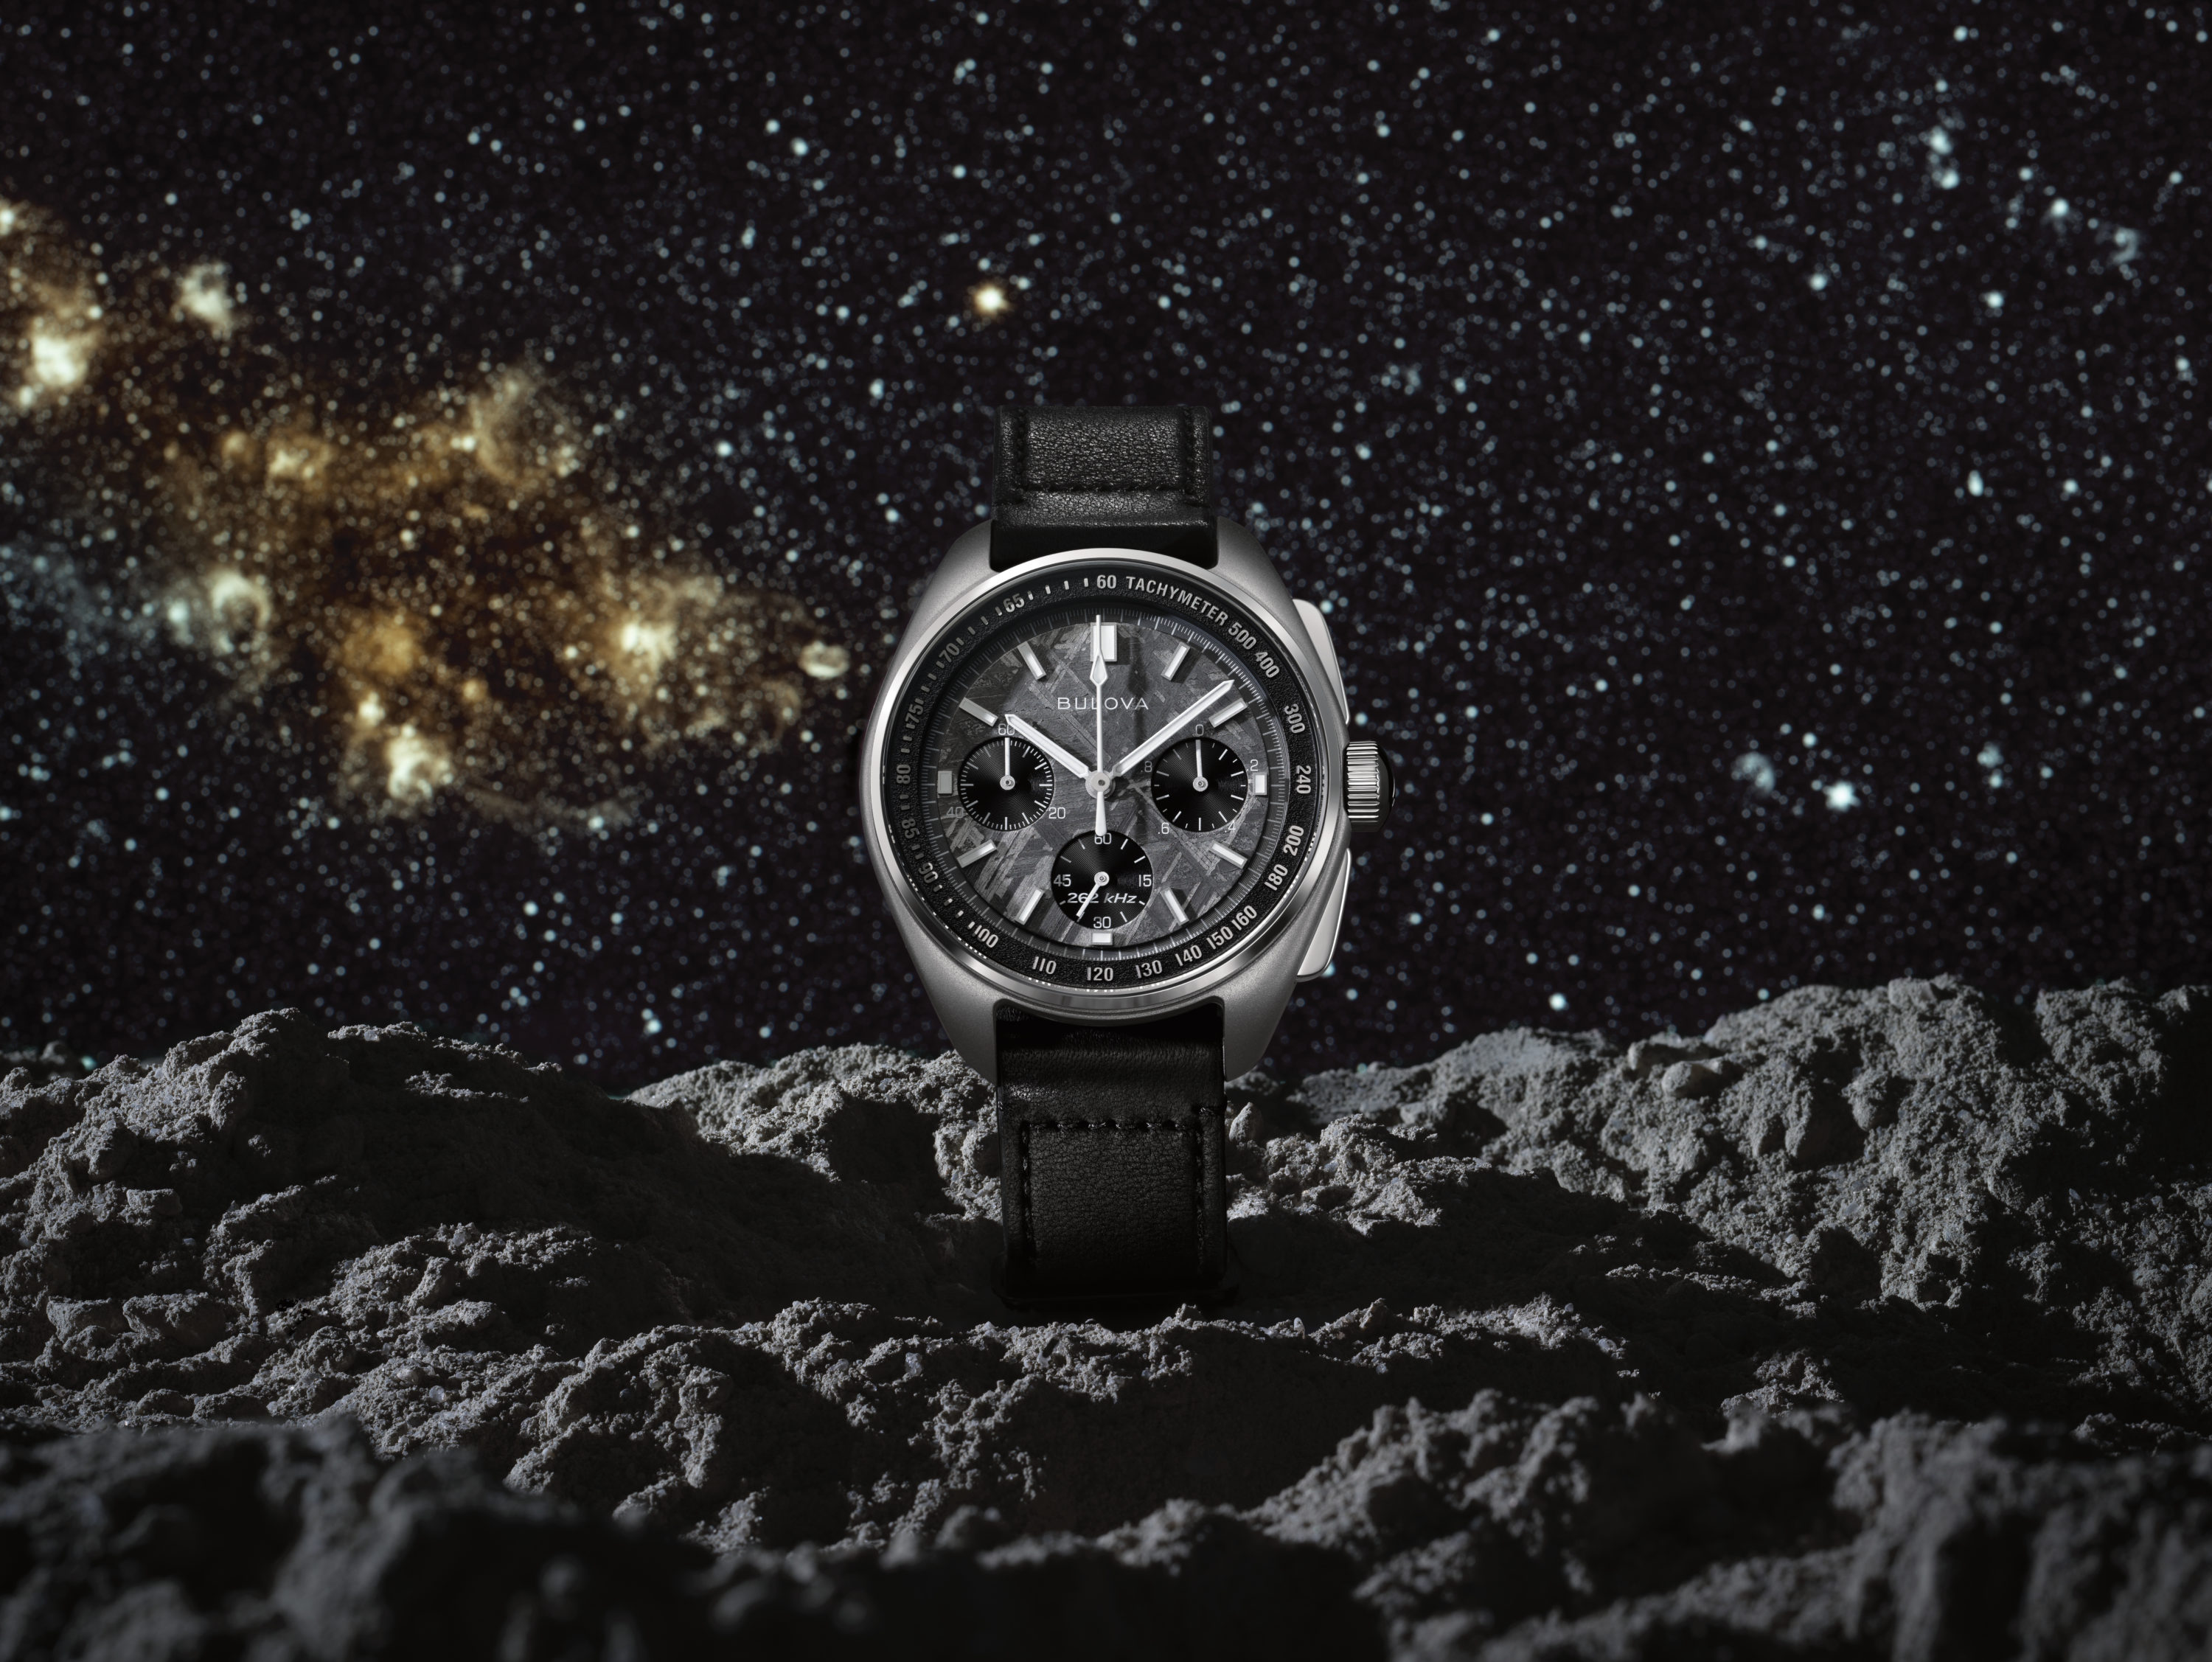 Sponsored: Bulova Unveils Meteorite Limited Edition Lunar Pilot Watch